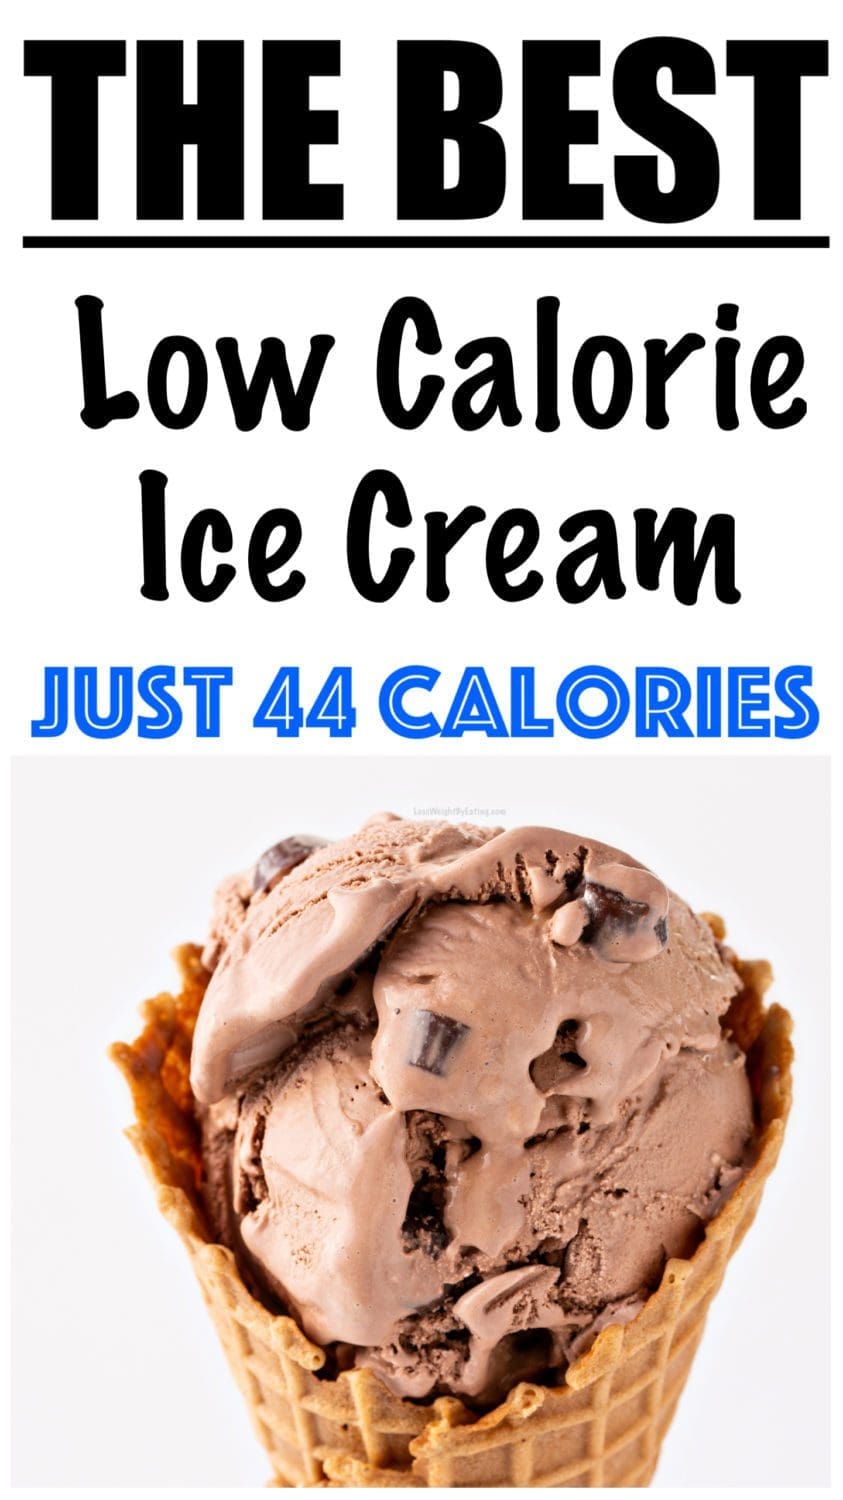 Low Calorie Ice Cream